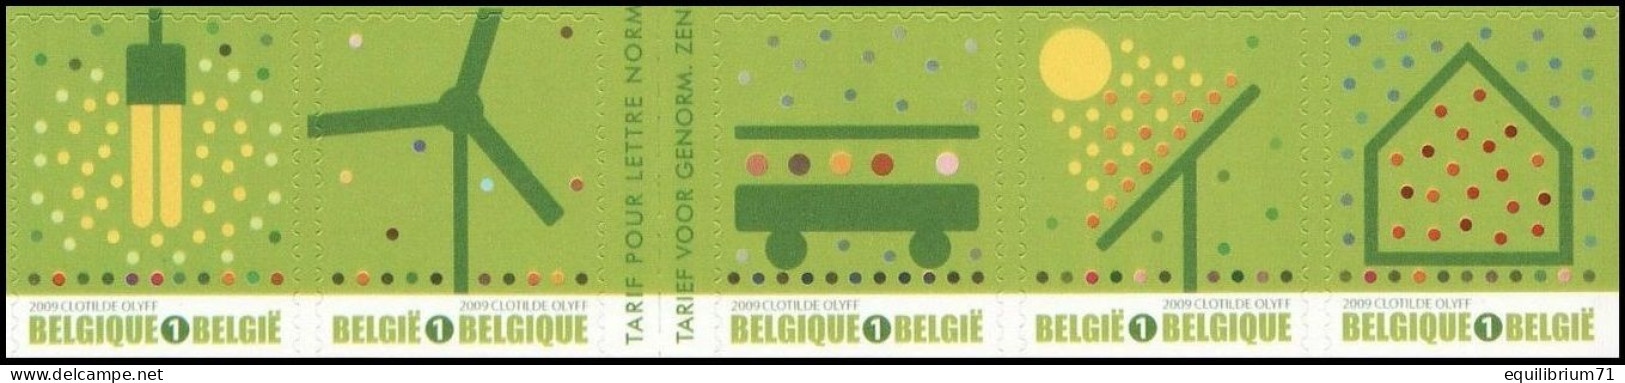 B104/C104**(3911-14 + 3915a) - Timbres Verts/Groene Zegels/Grüne Briefmarken - 1/2 Carnet/1/2 Boekje - BELGIQUE / BELGIË - Nuevos